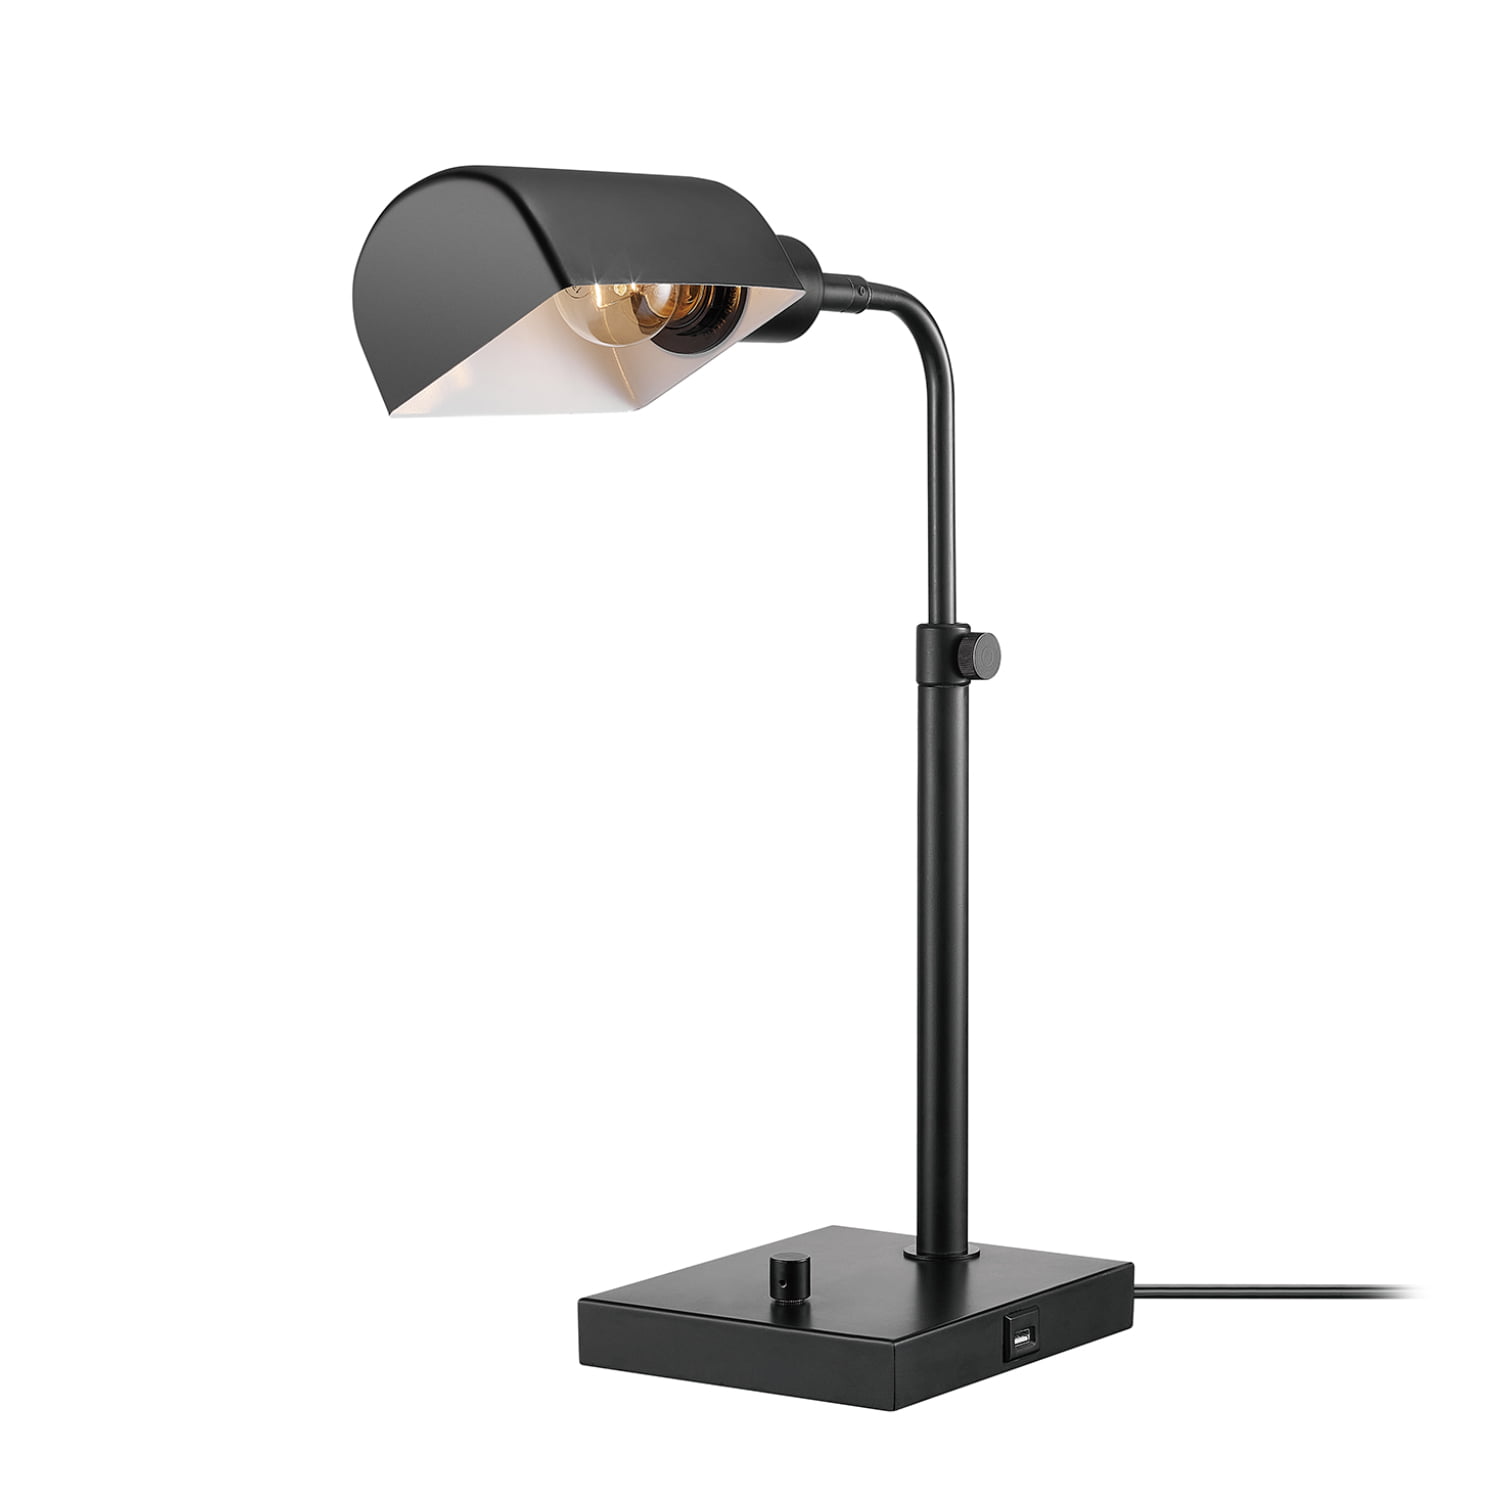 Alera Architect Lamp Adjustable Clamp-on 28 High Black Lmp702b for sale online 